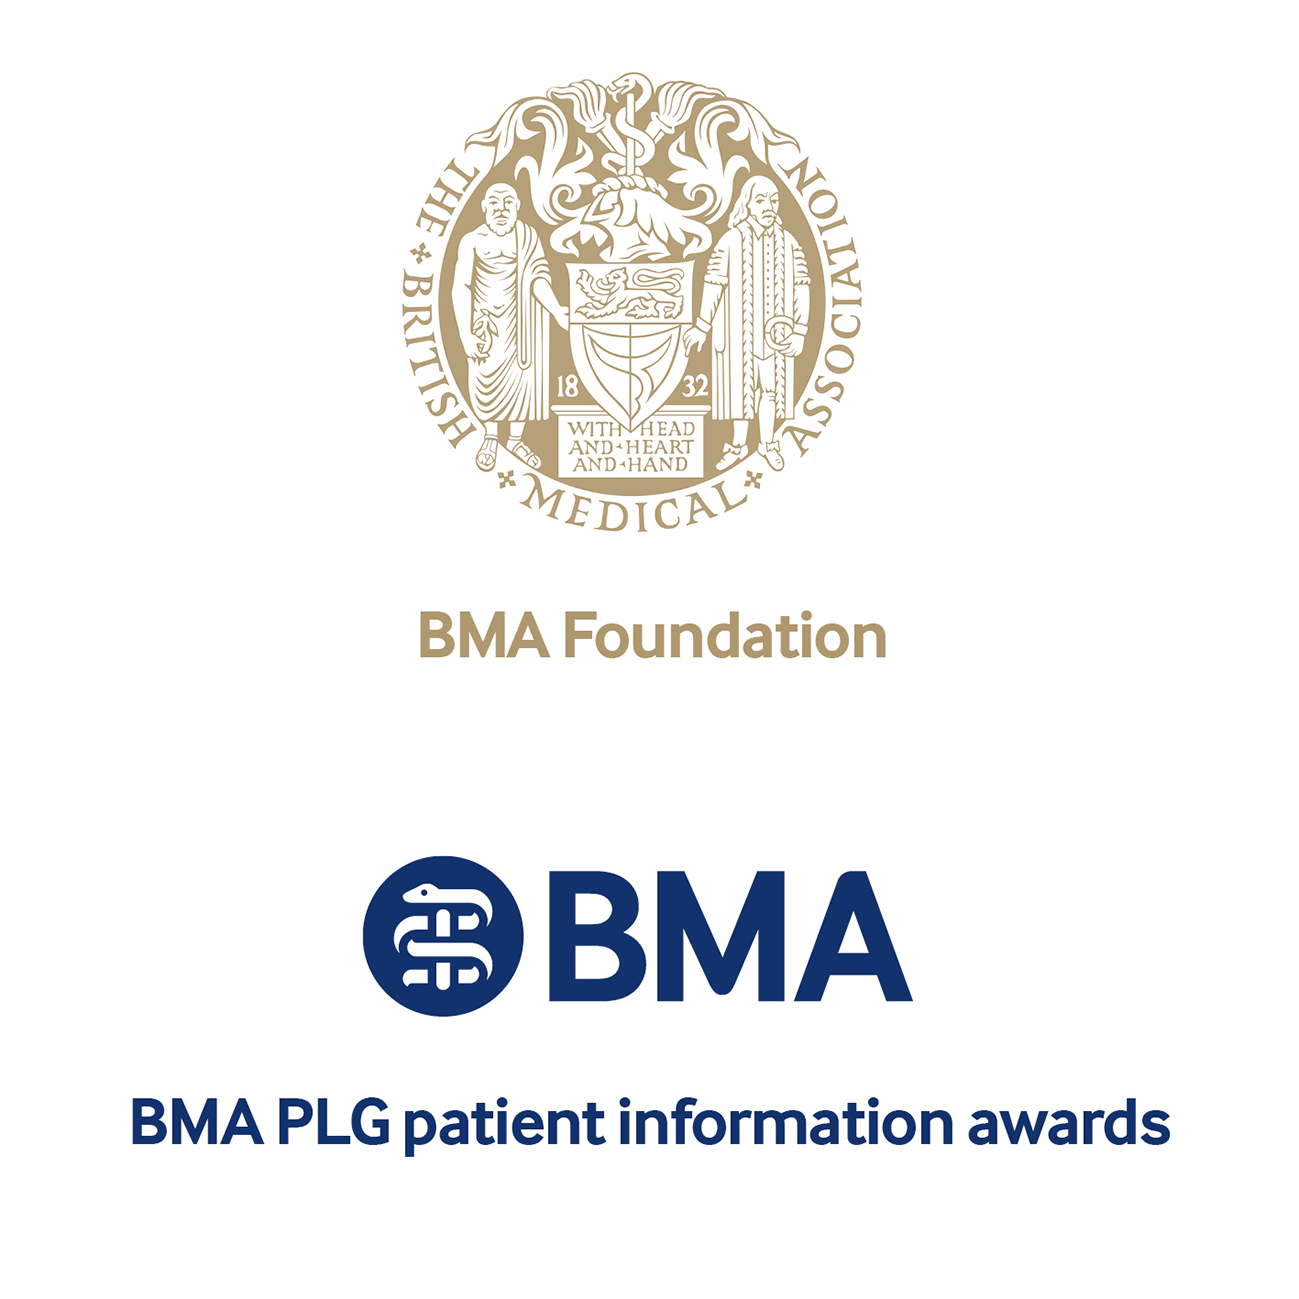 British Medical Association - Grants and Awards Management logo